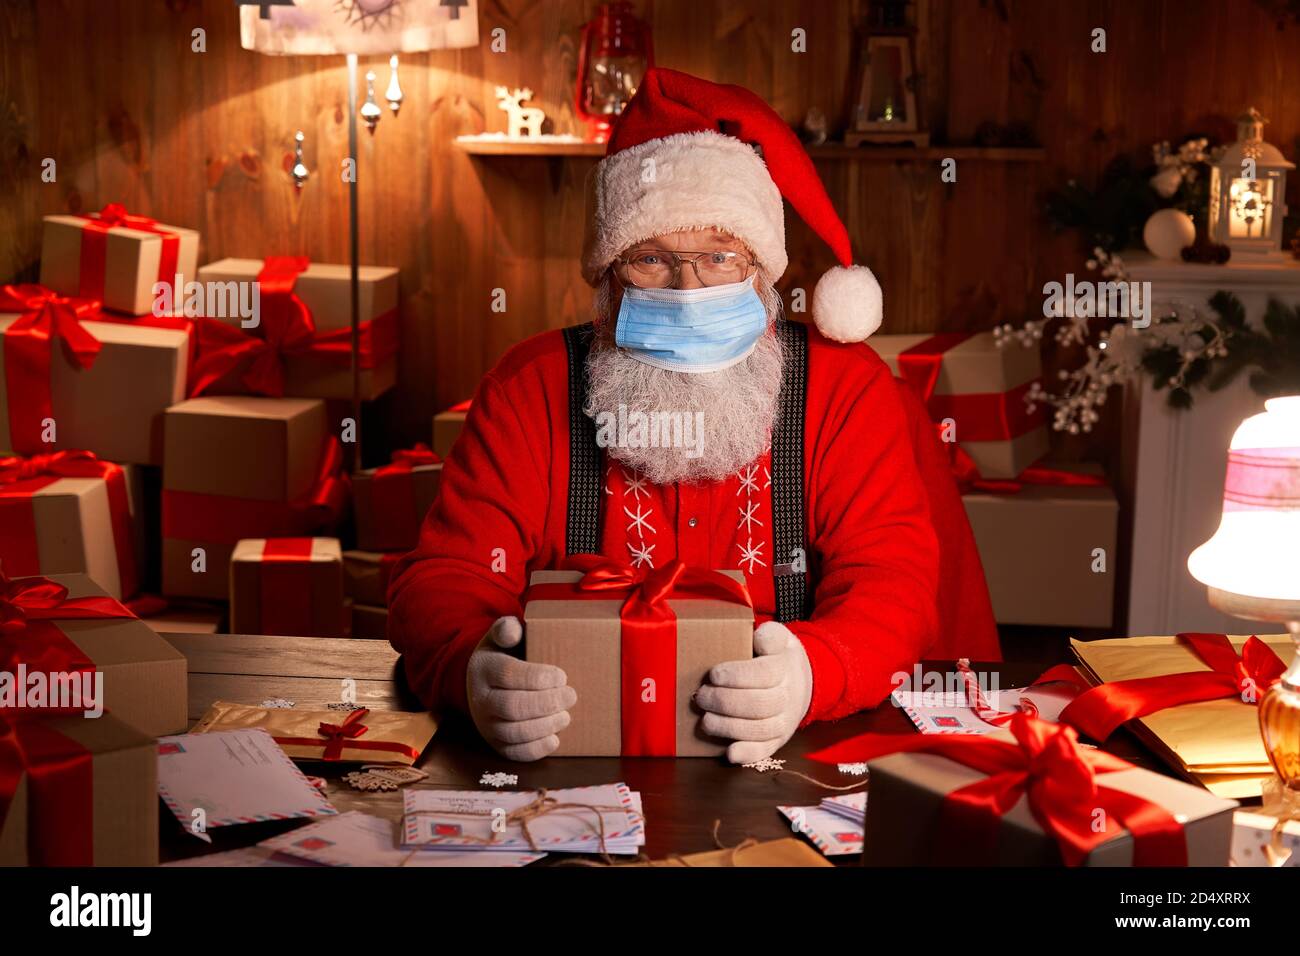 Santa wearing face mask holding Christmas gifts on xmas eve. Stock Photo